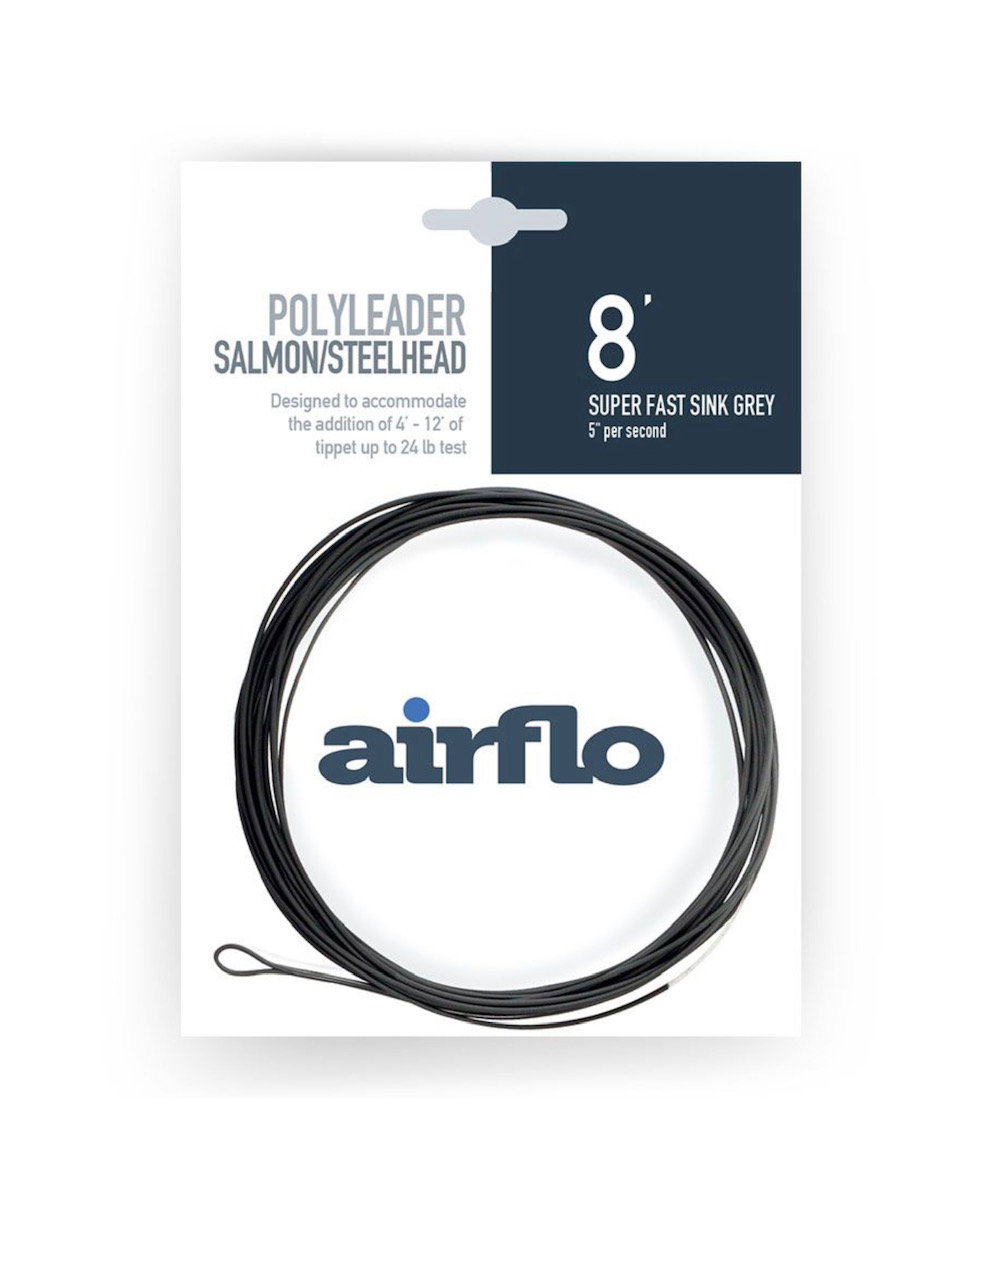 Airflo Polyleader Salmon/Steelhead  - 8' - Clear Hover (0.5ips)